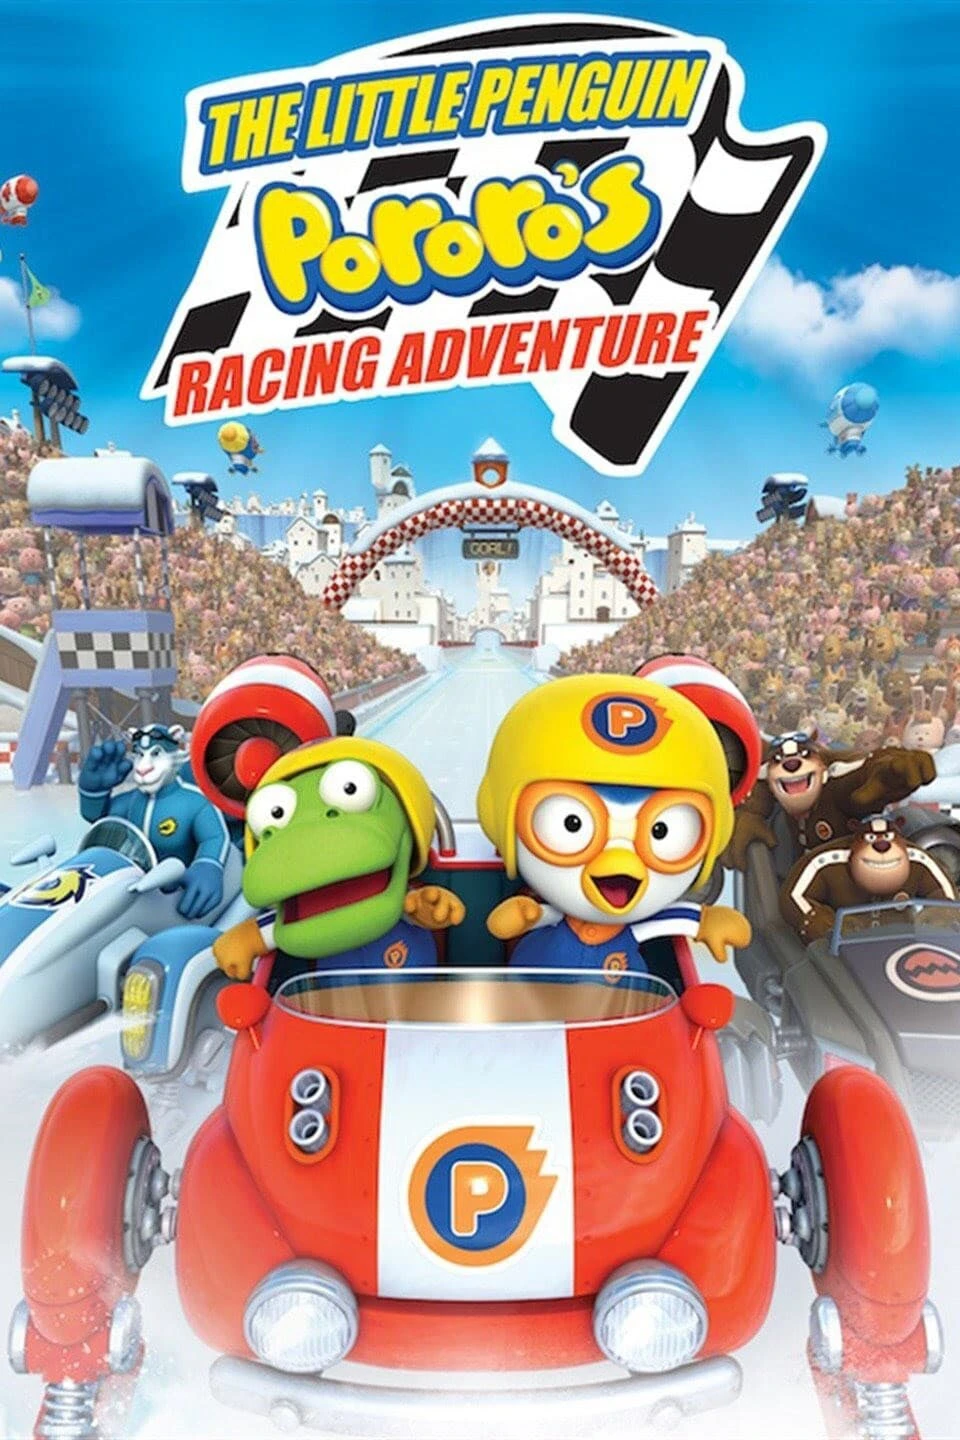 Pororo: Đường Đua Mạo Hiểm | The Little Penguin Pororo's Racing Adventure (2013)